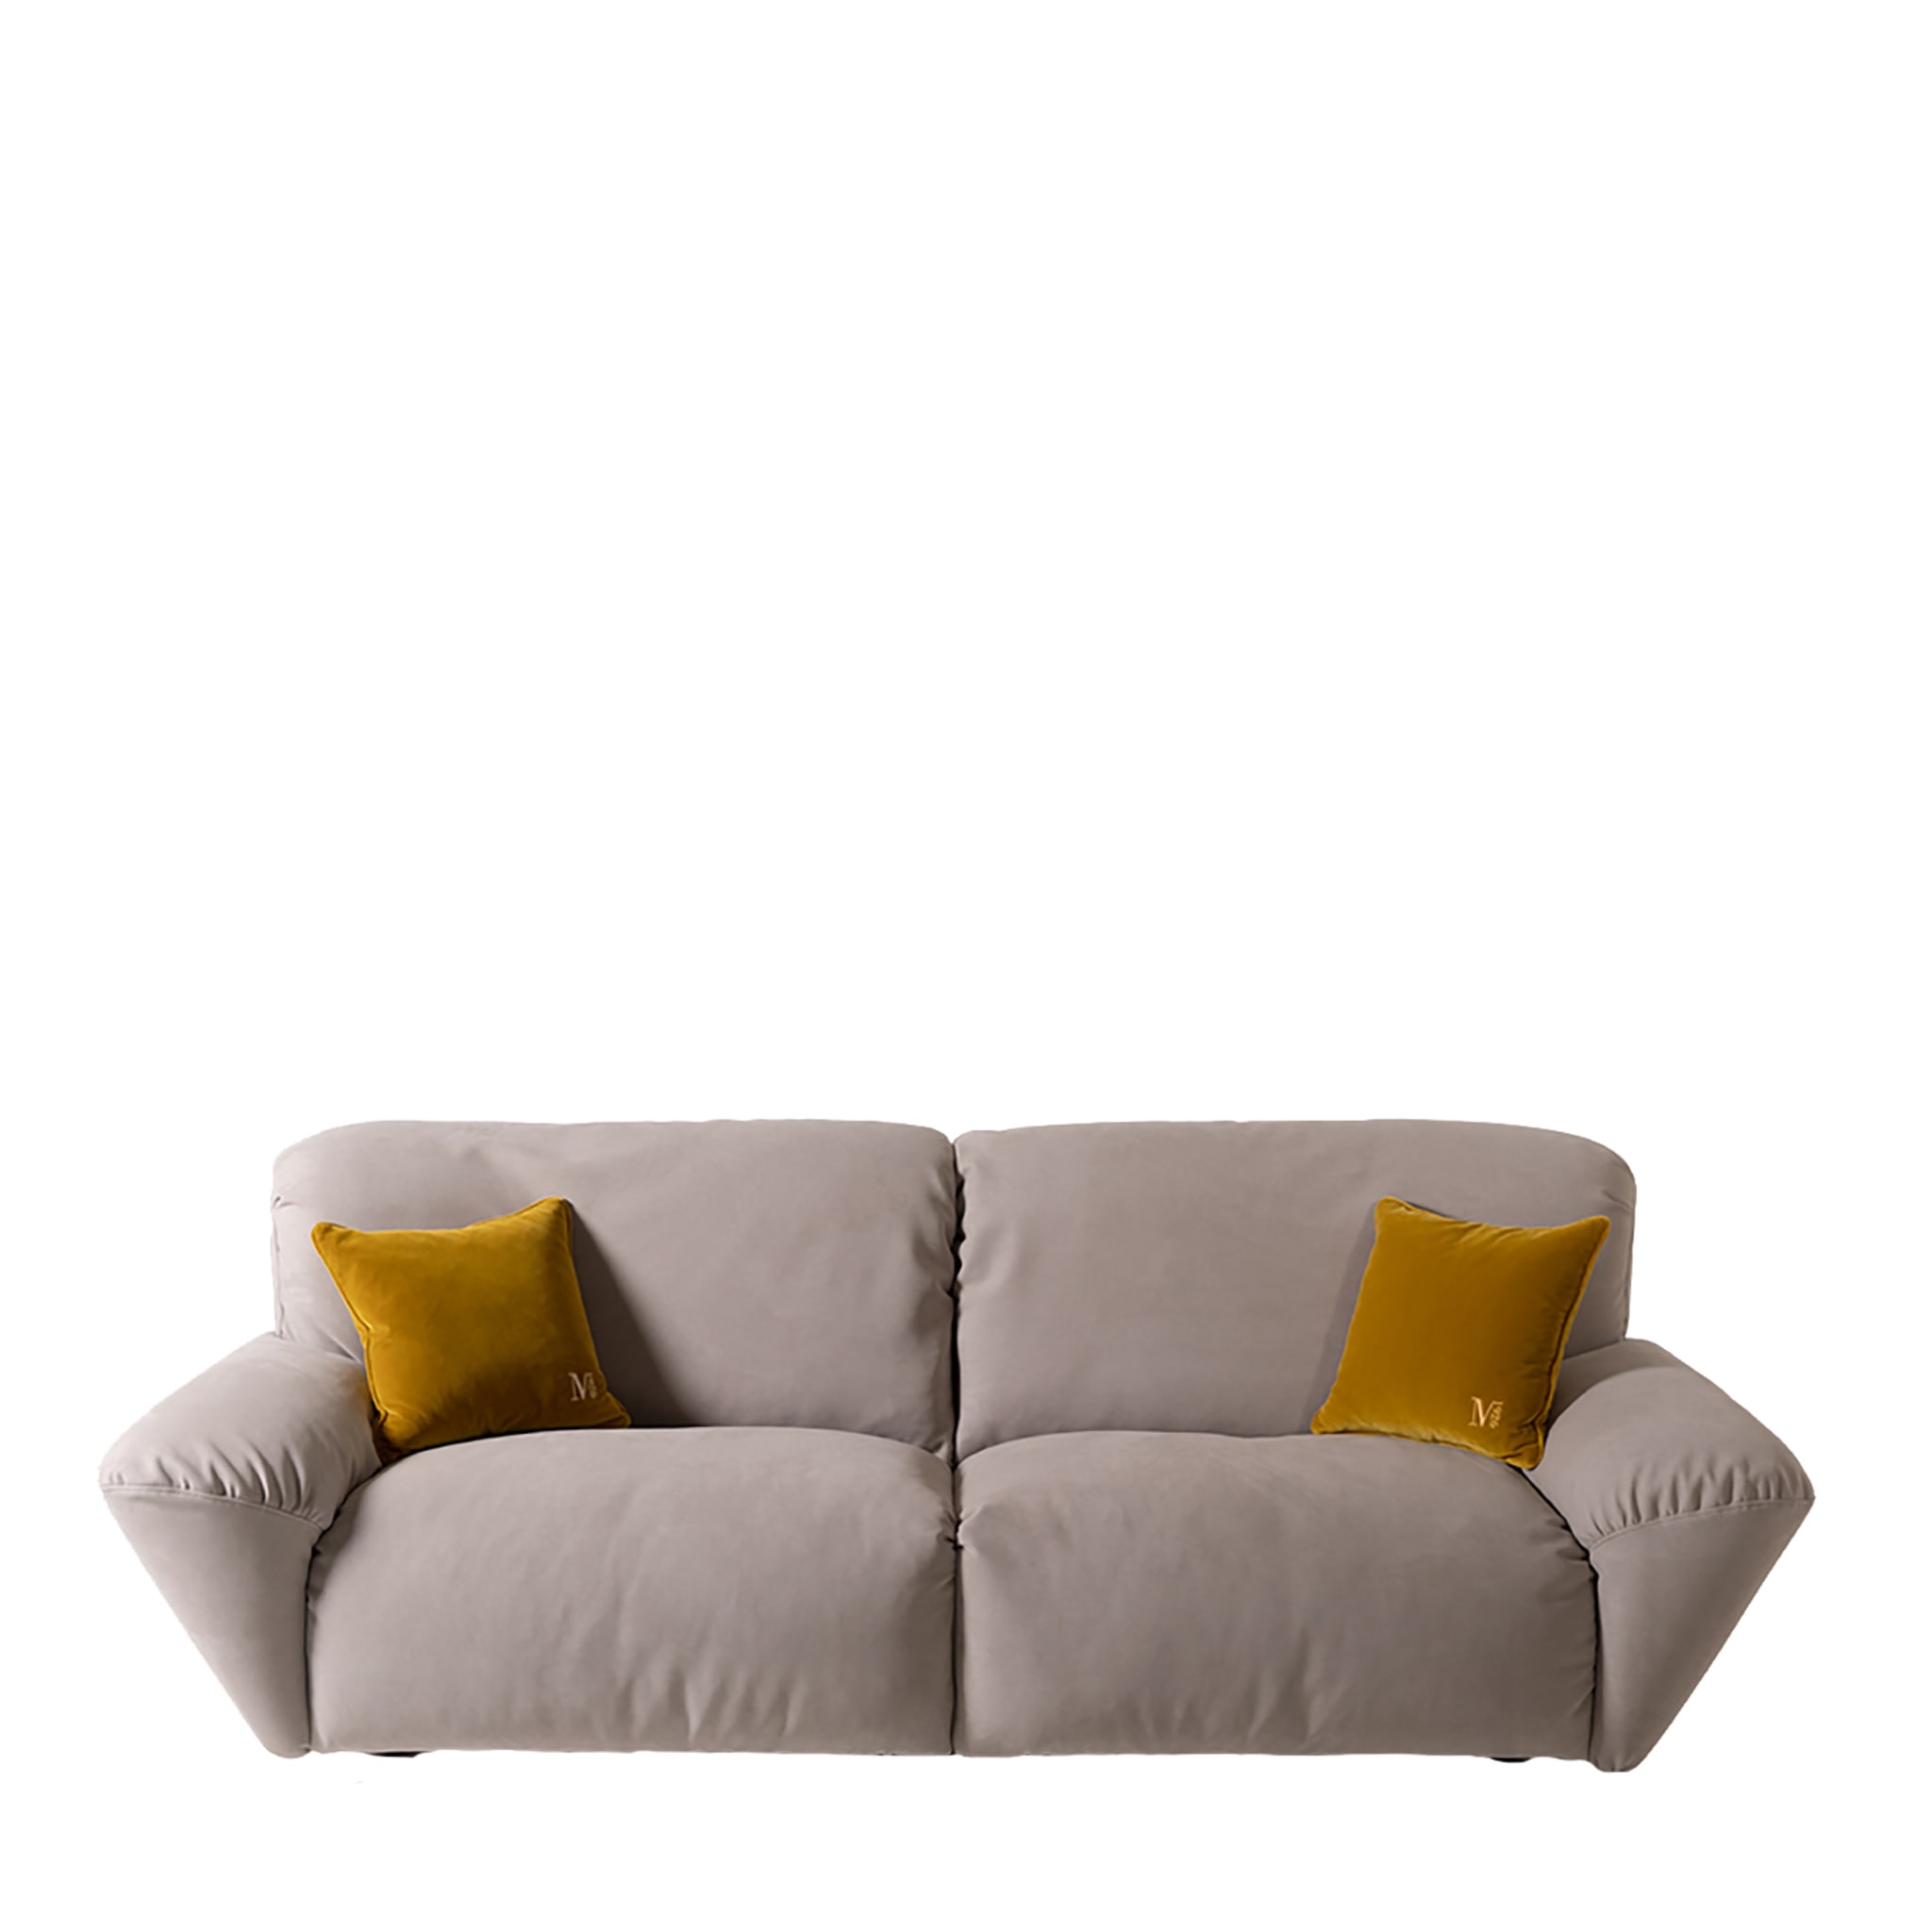 Beluga 2-sitziges midi-sofa von Marco und Giulio Mantellassi - Hauptansicht